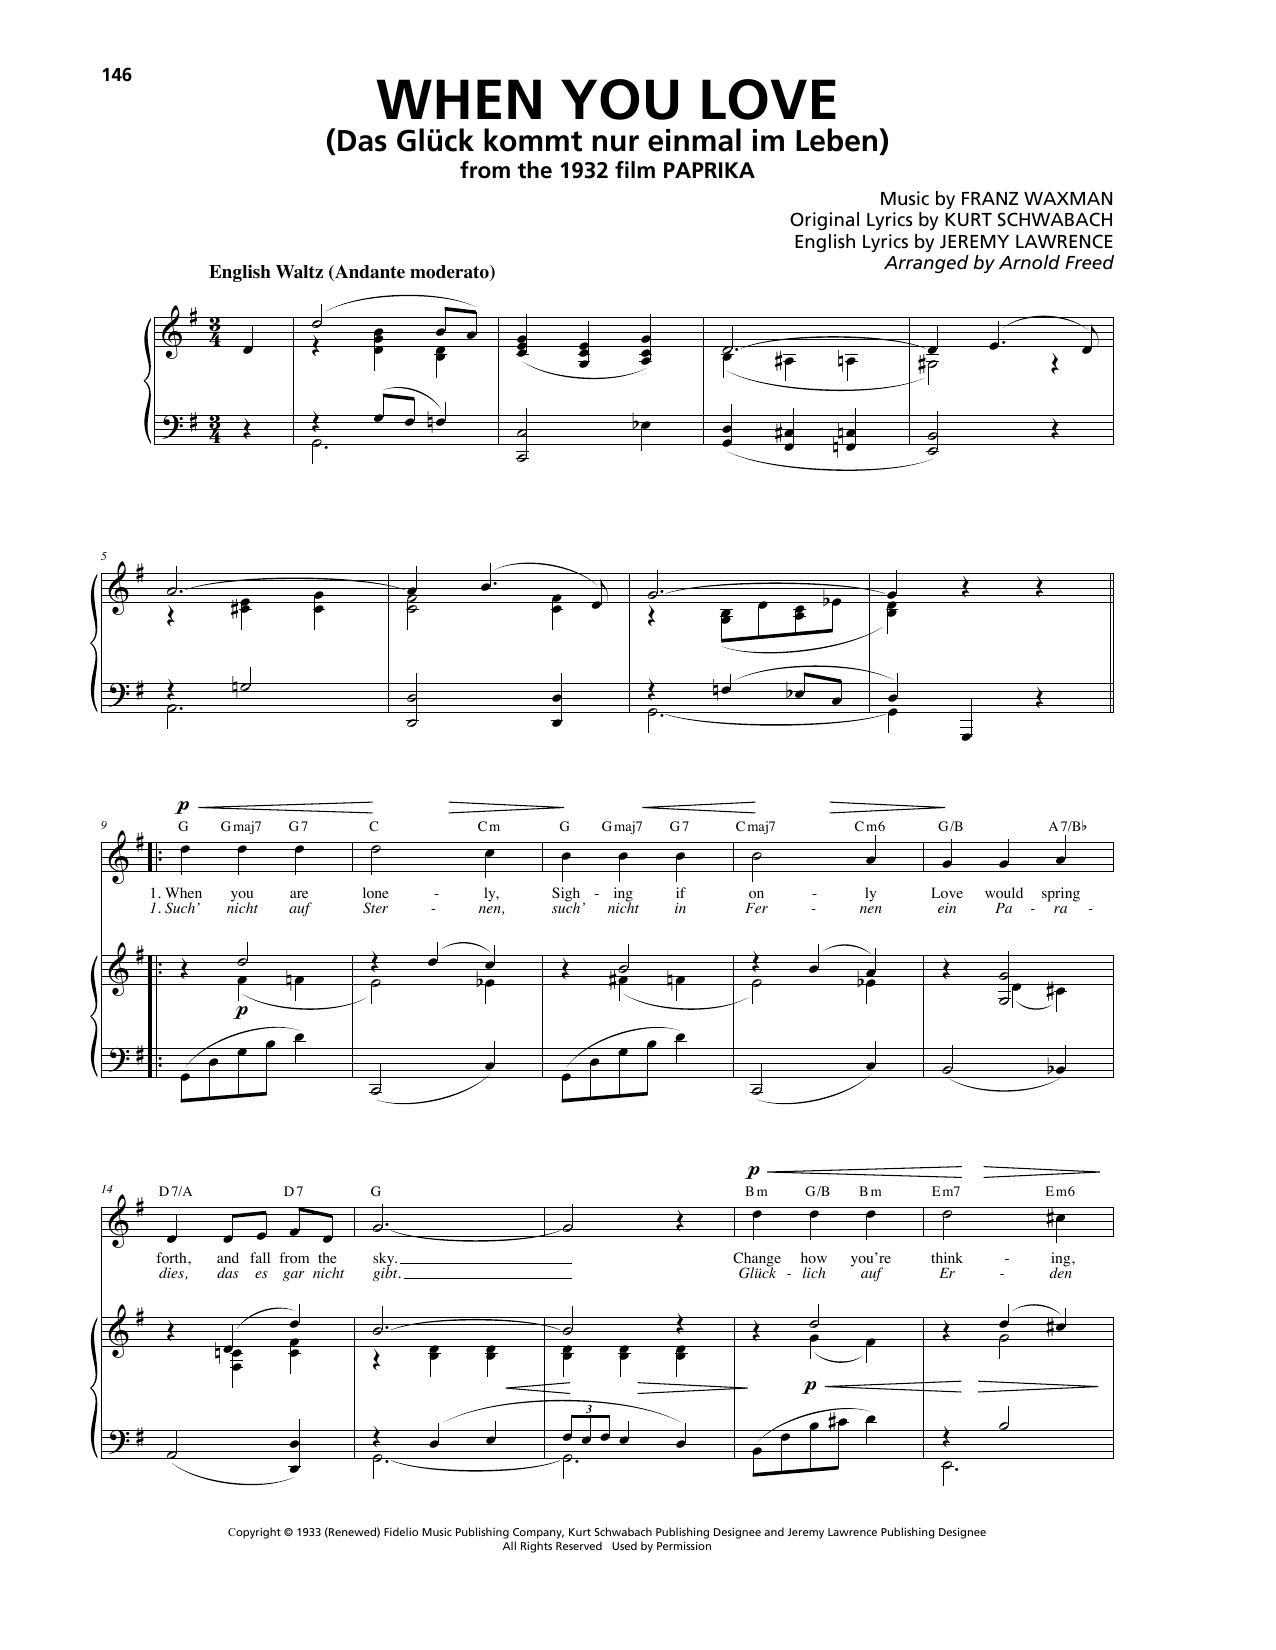 Franz Waxman When You Love (Das Glück kommt nur einmal im Leben) Sheet Music Notes & Chords for Piano, Vocal & Guitar (Right-Hand Melody) - Download or Print PDF